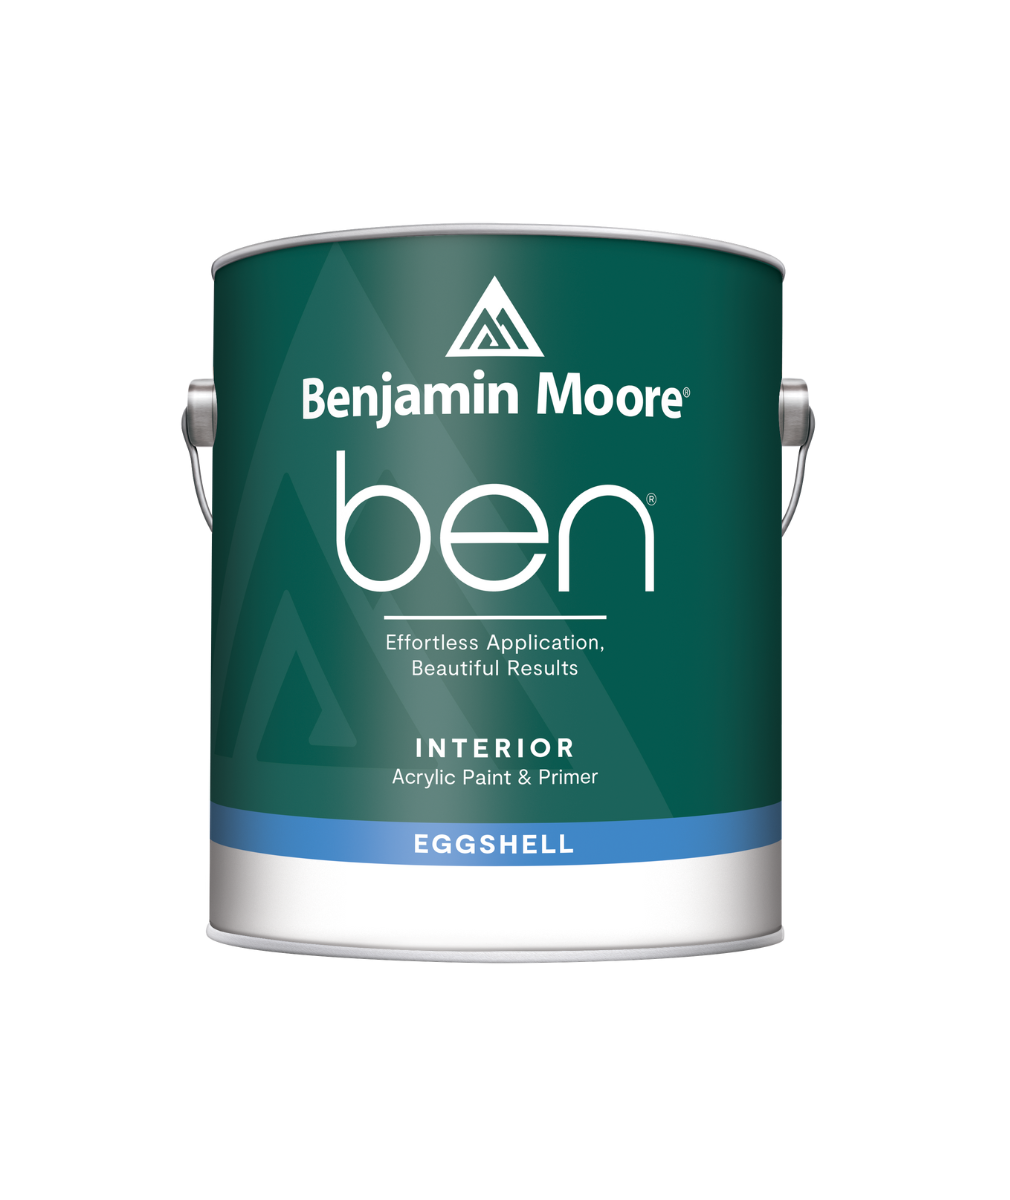 Benjamin Moore ben Interior Eggshell located in Sudbury ON at Barrydowne Paint.